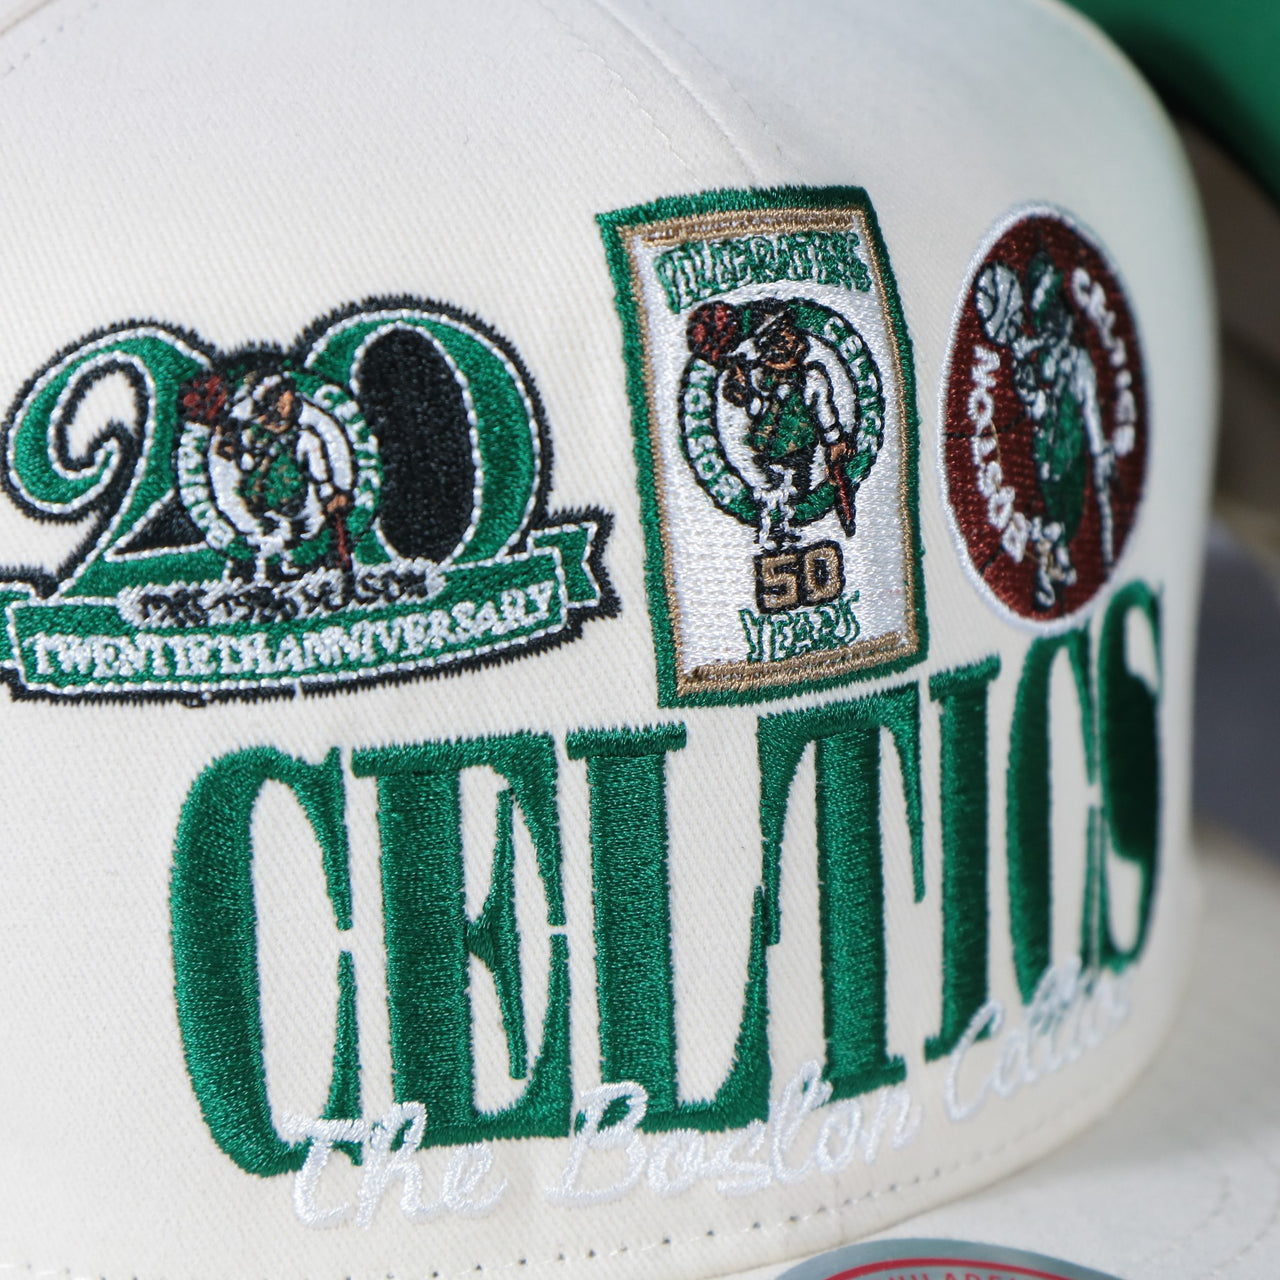 vintage celtics logos on the Boston Celtics Hardwood Classics Reframe Retro Green bottom | Off-White Snapback Hat